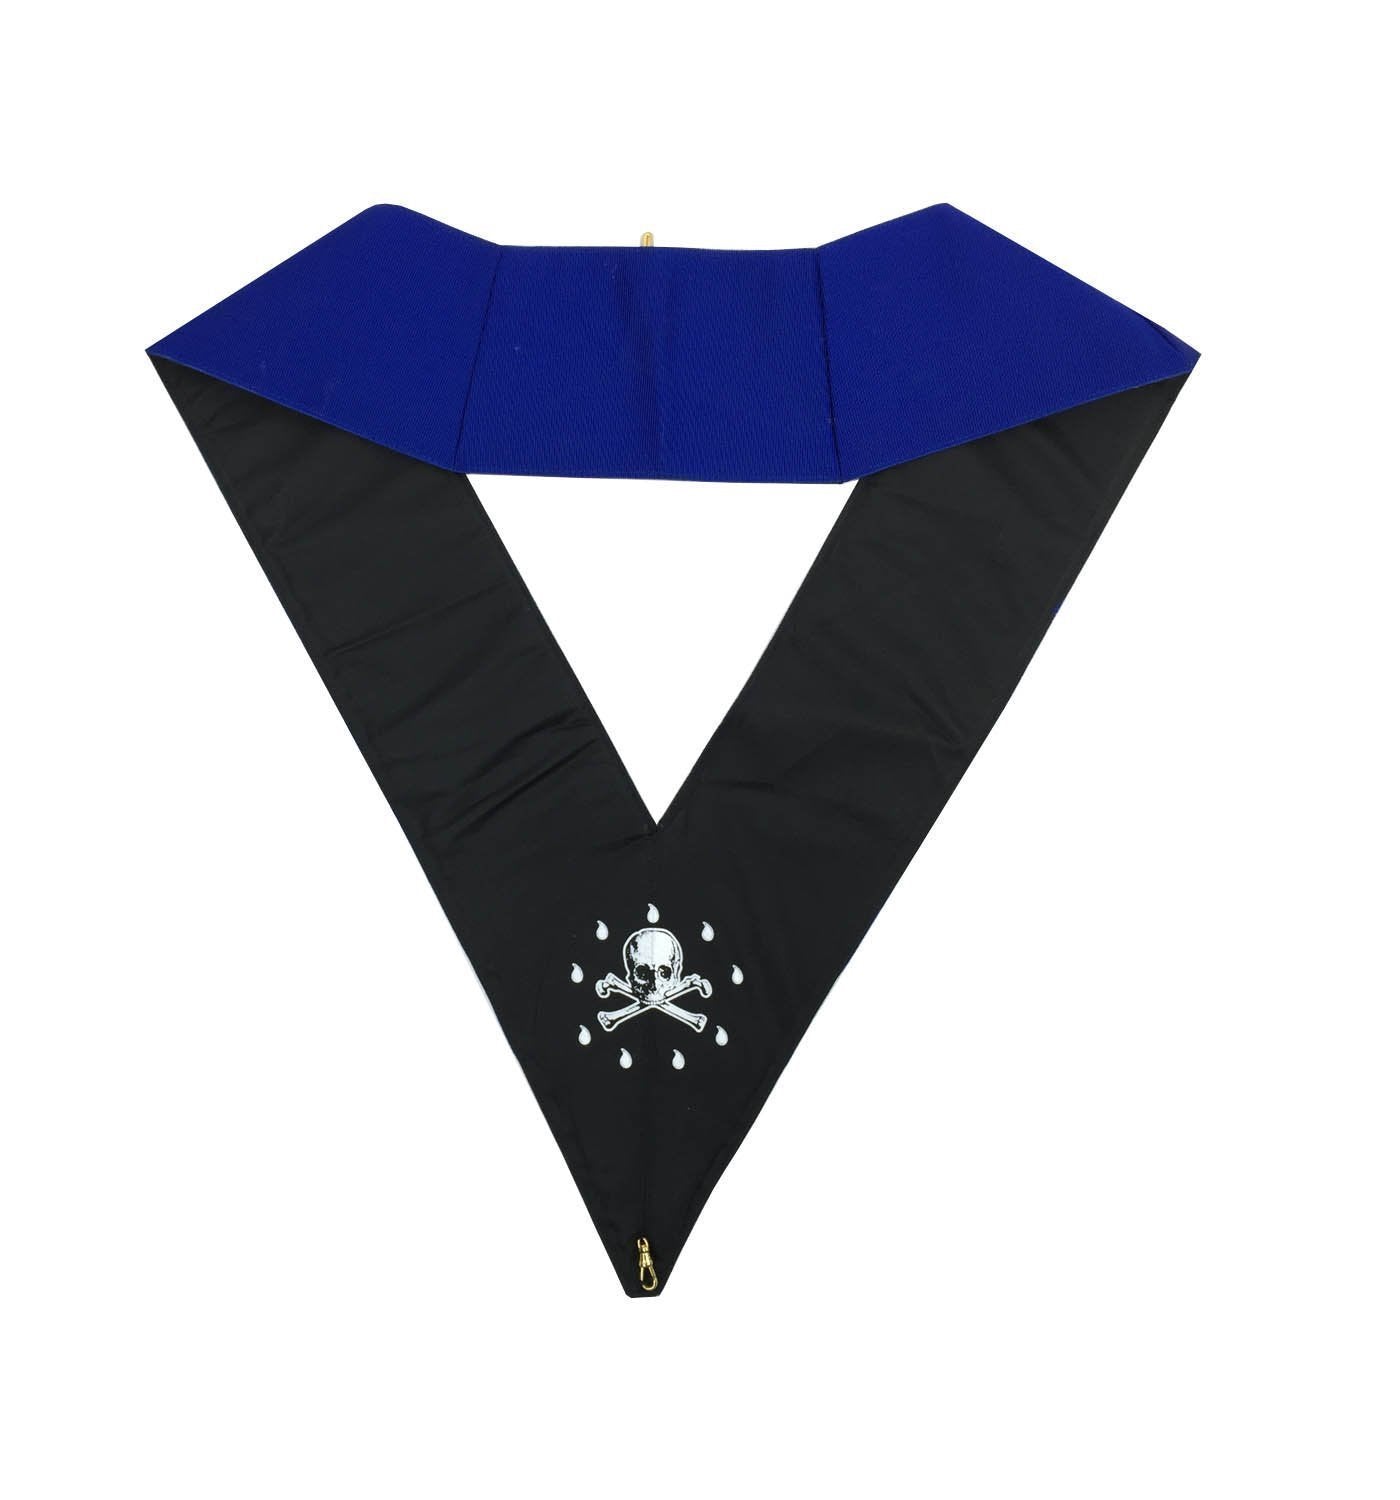 Super intendent of Works Blue Lodge Collar - Royal Blue - Bricks Masons